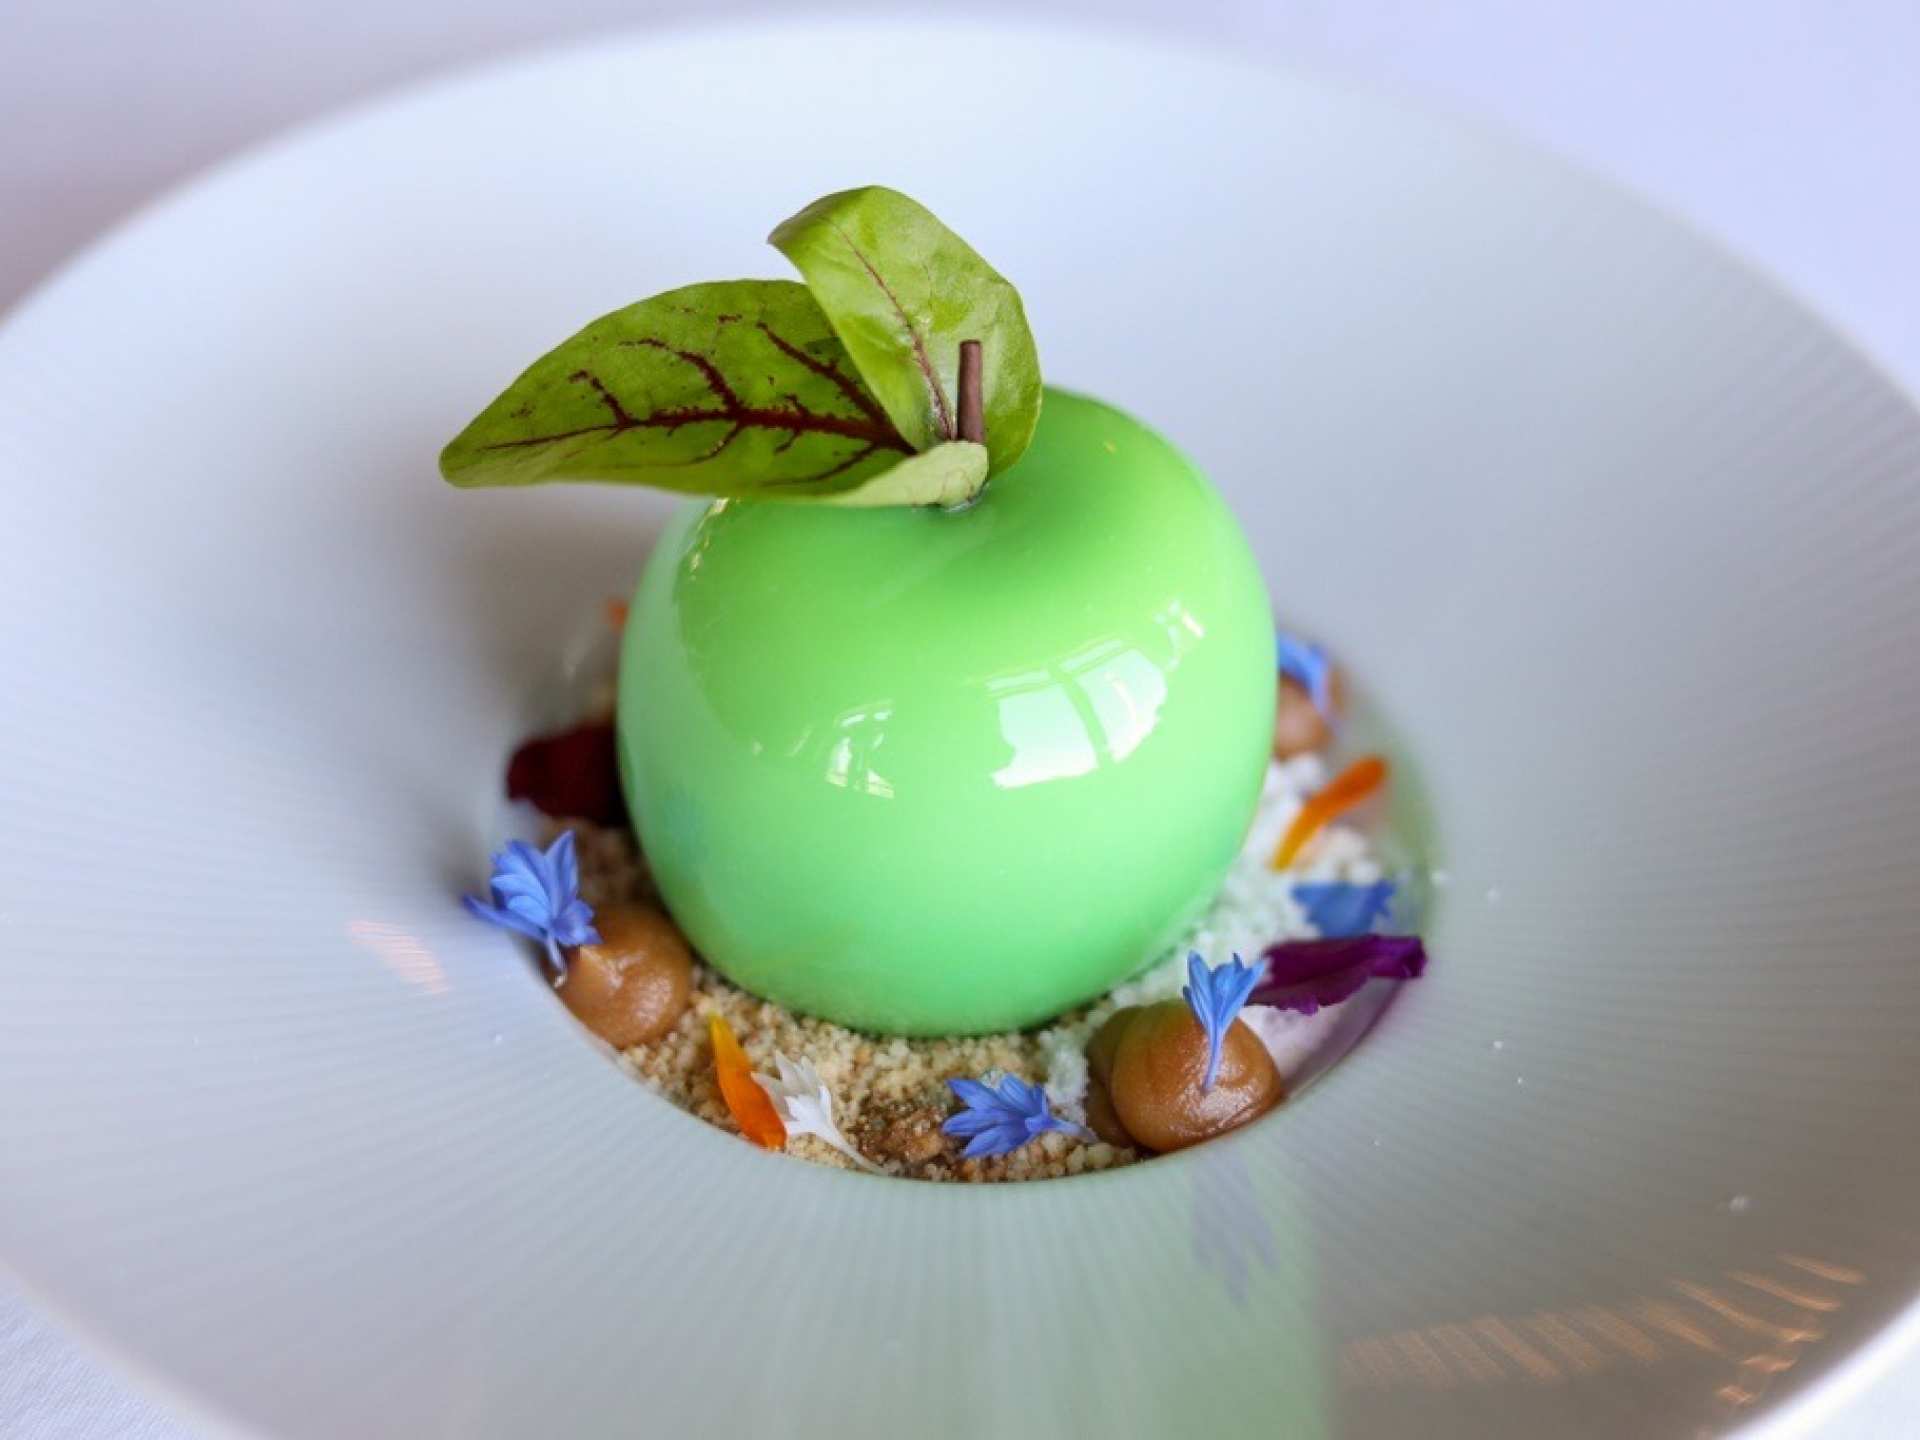 Mission Point Resort | The Apple dessert at Chianti restaurant at Mission Point resort